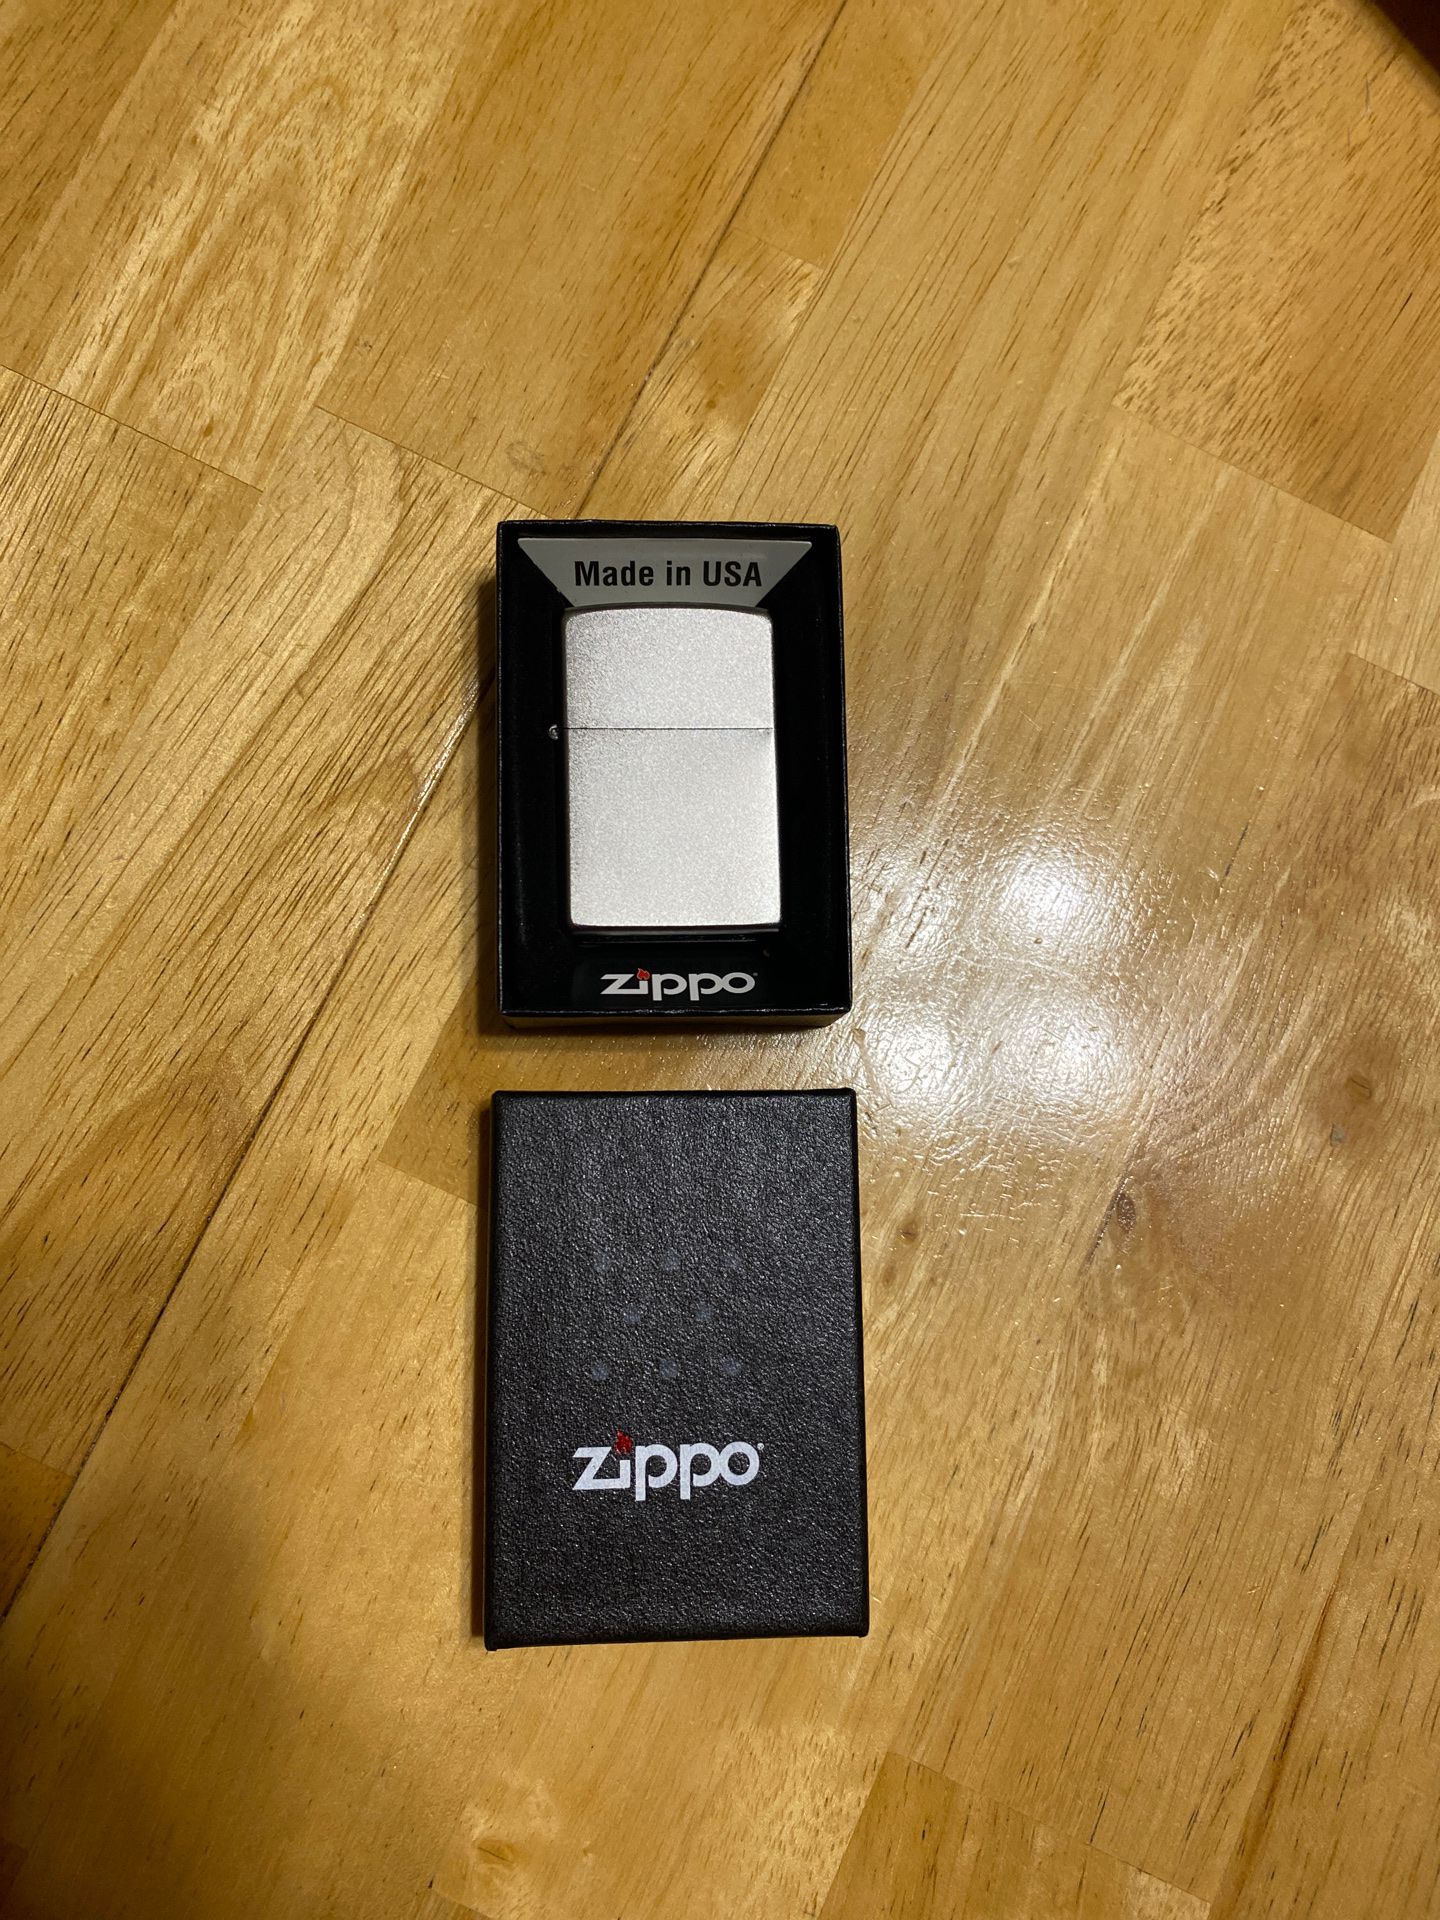 2 Zippo Brand Lighters. Never Used